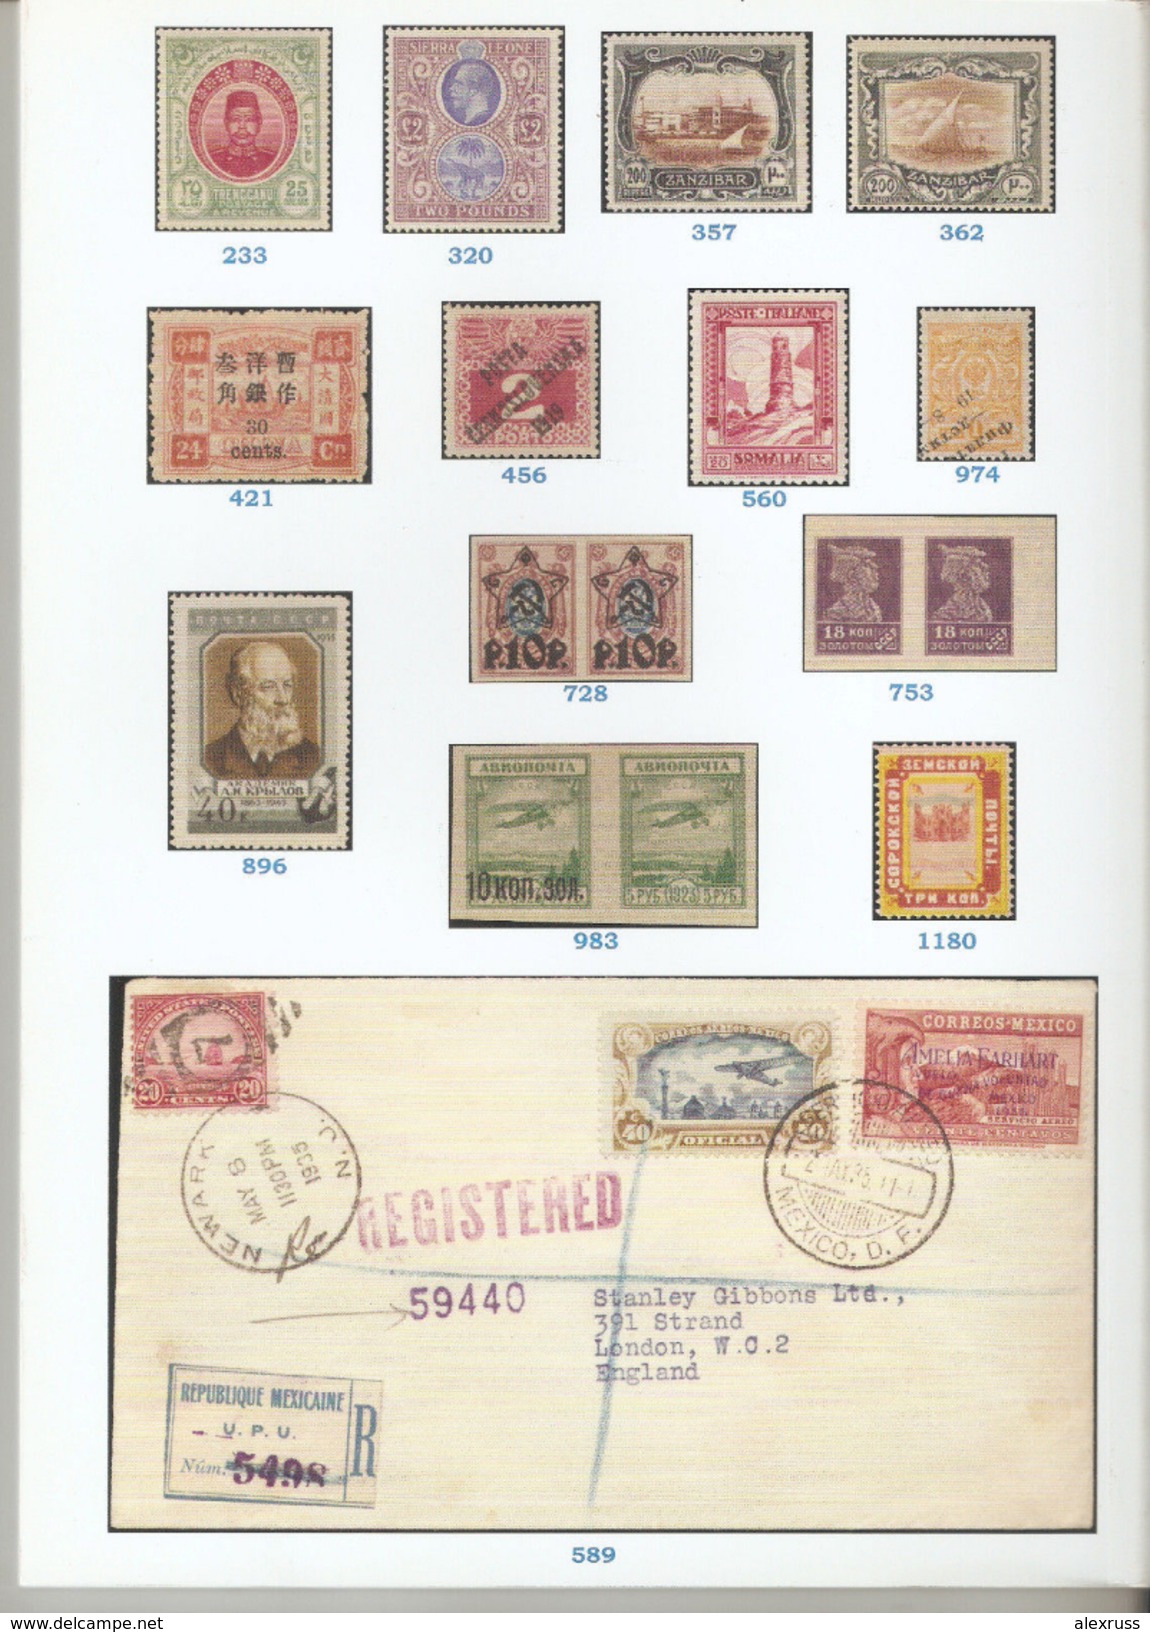 Raritan Stamps Auction 64,Mar 2015 Catalog Of Rare Russia Stamps,Errors & Worldwide Rarities - Catalogi Van Veilinghuizen